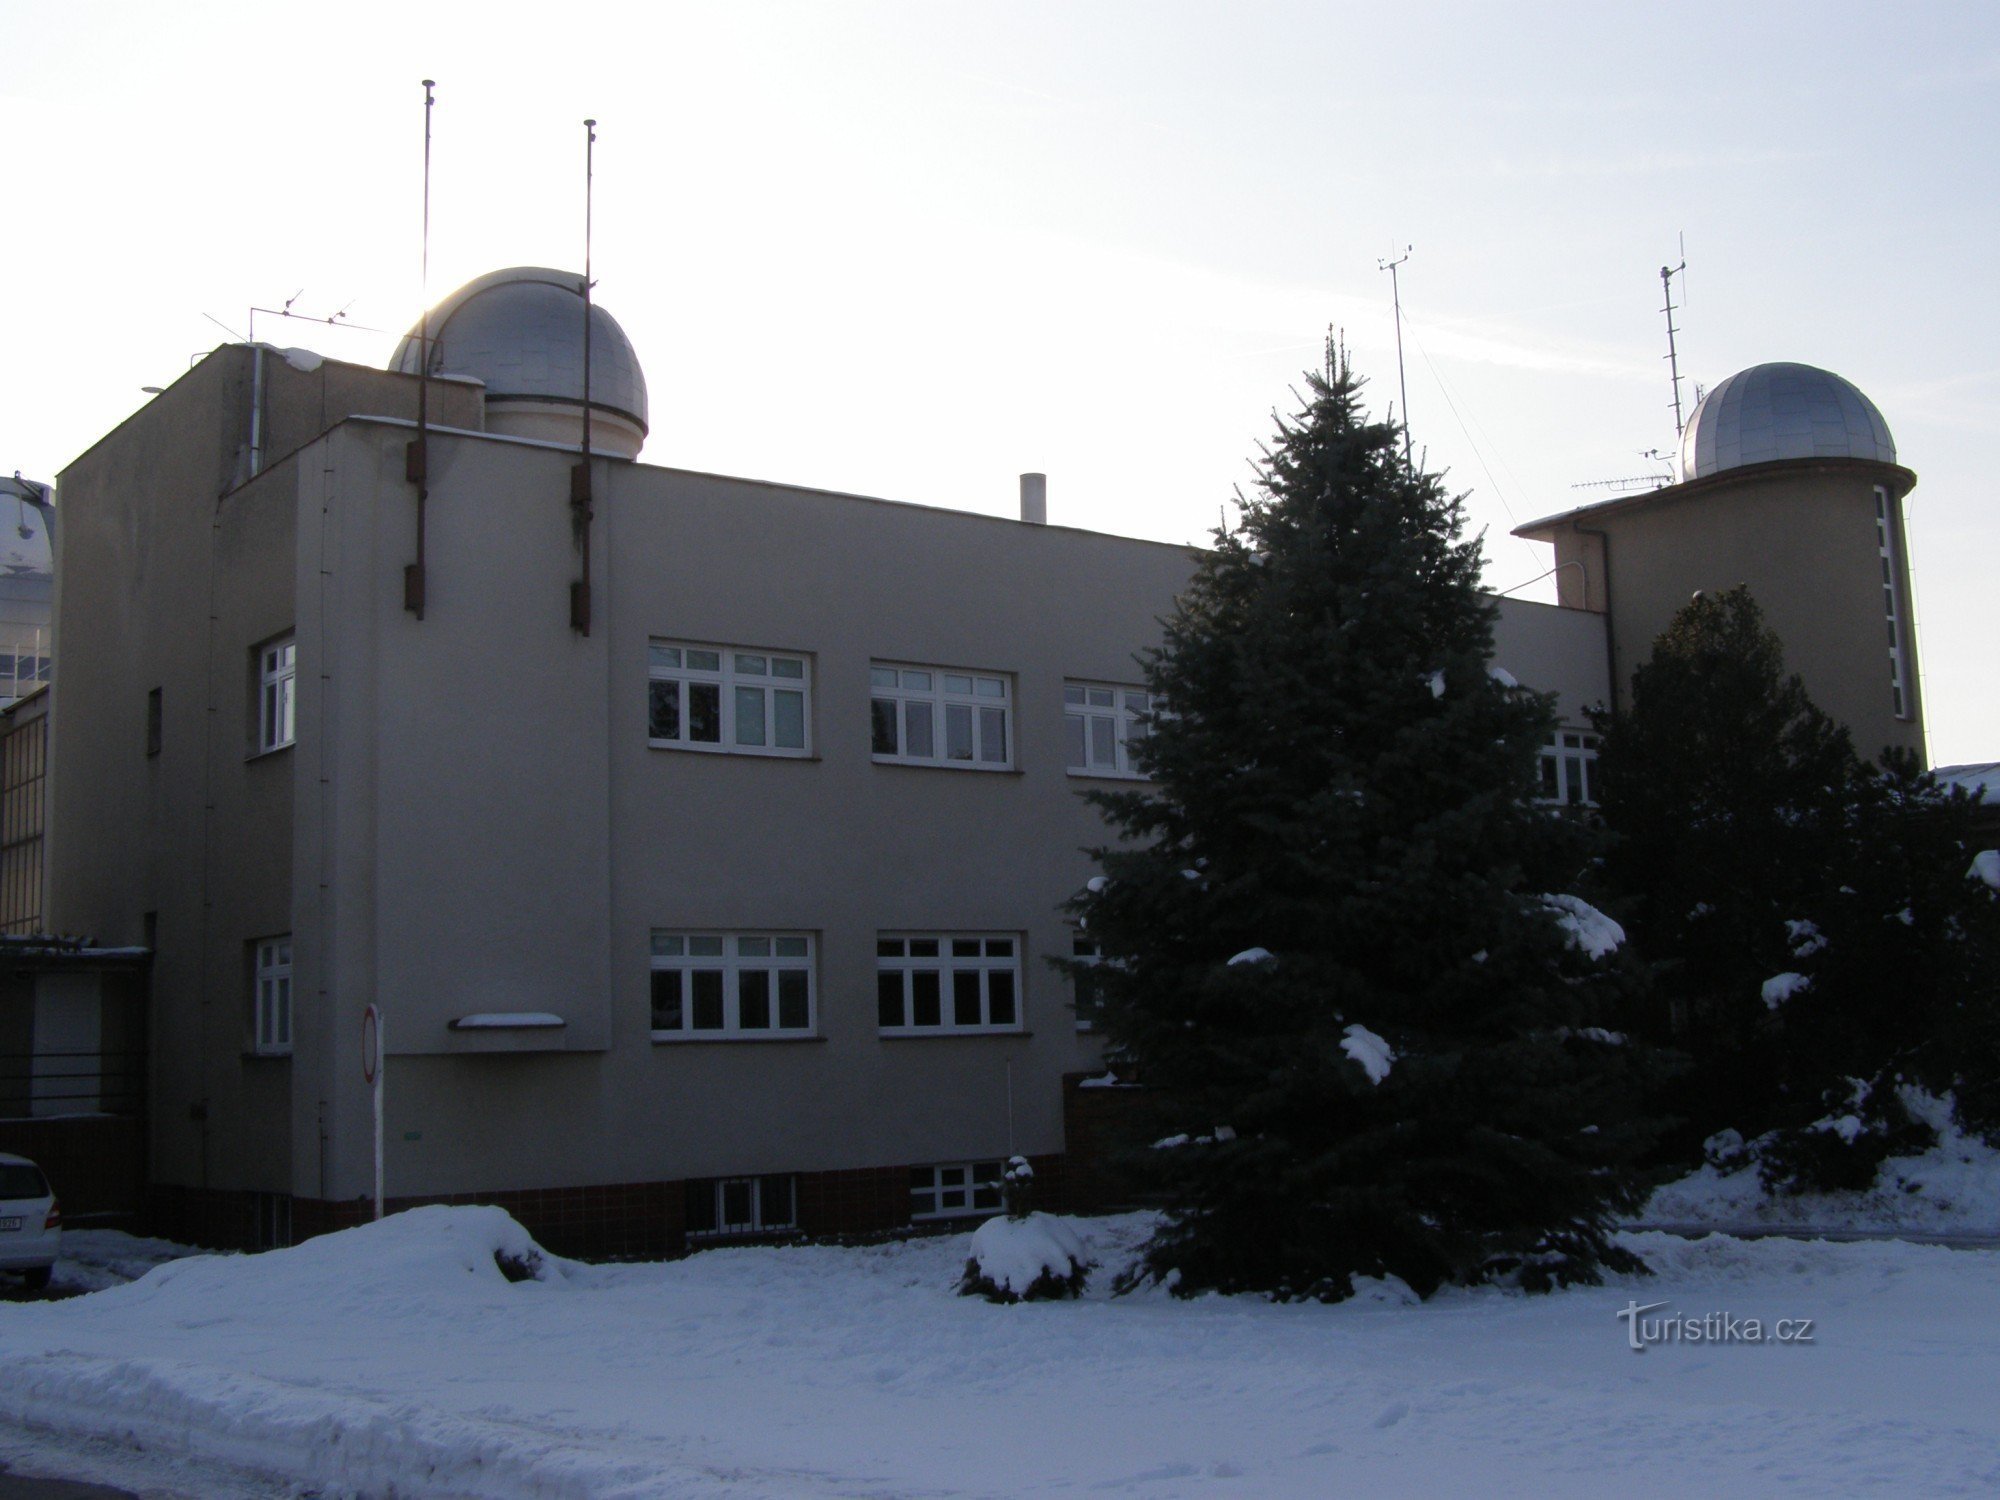 Hradec Králové - observatory and planetarium